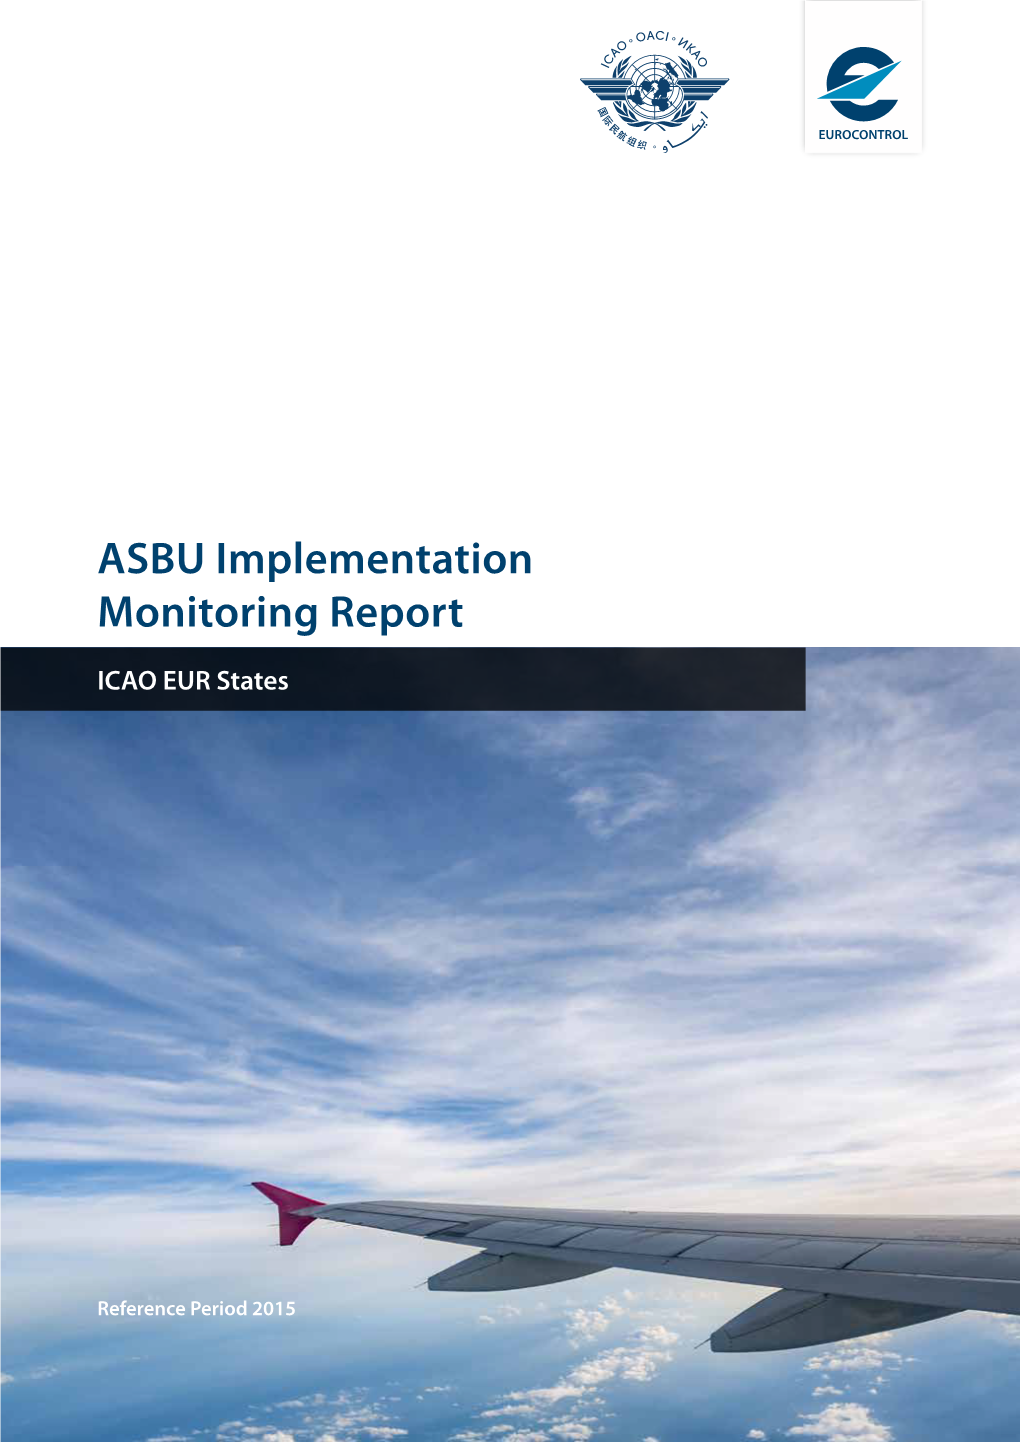 ASBU Implementation Monitoring Report (2015)